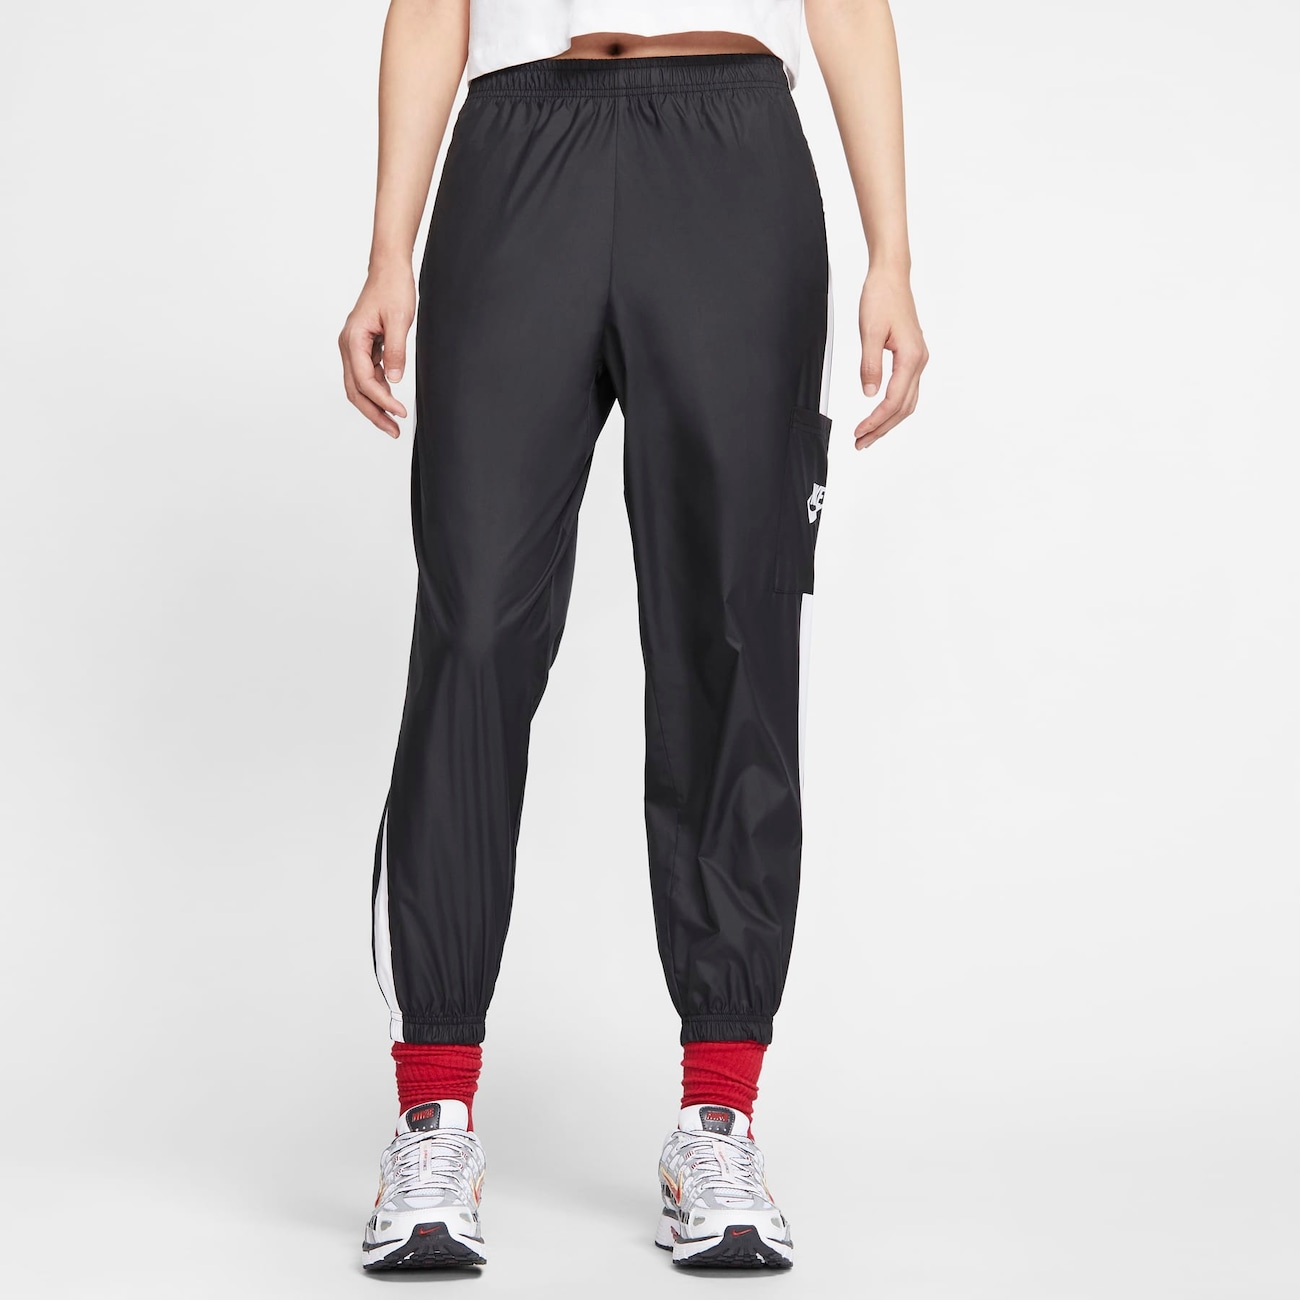 Calça Nike Sportswear Feminina